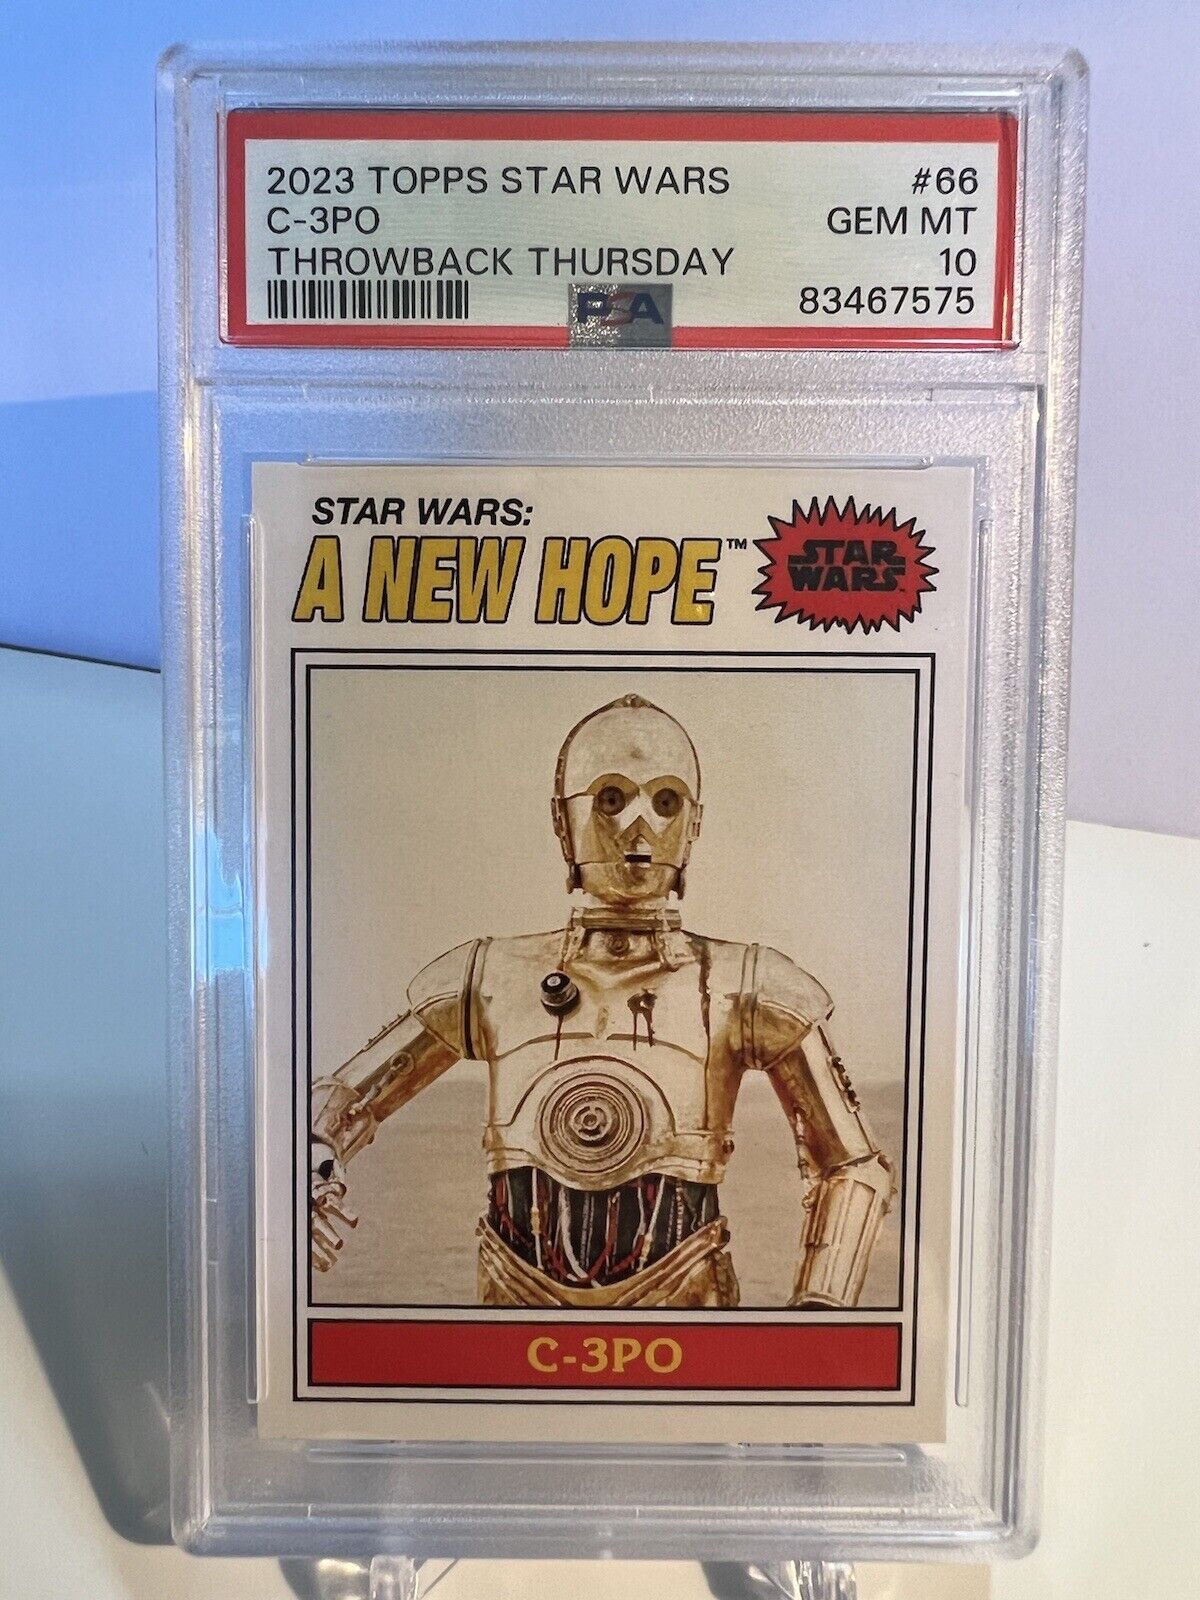 C-3PO 2023 Topps Throwback Thursday Star Wars #66 PSA 10 GEM MINT - Droid